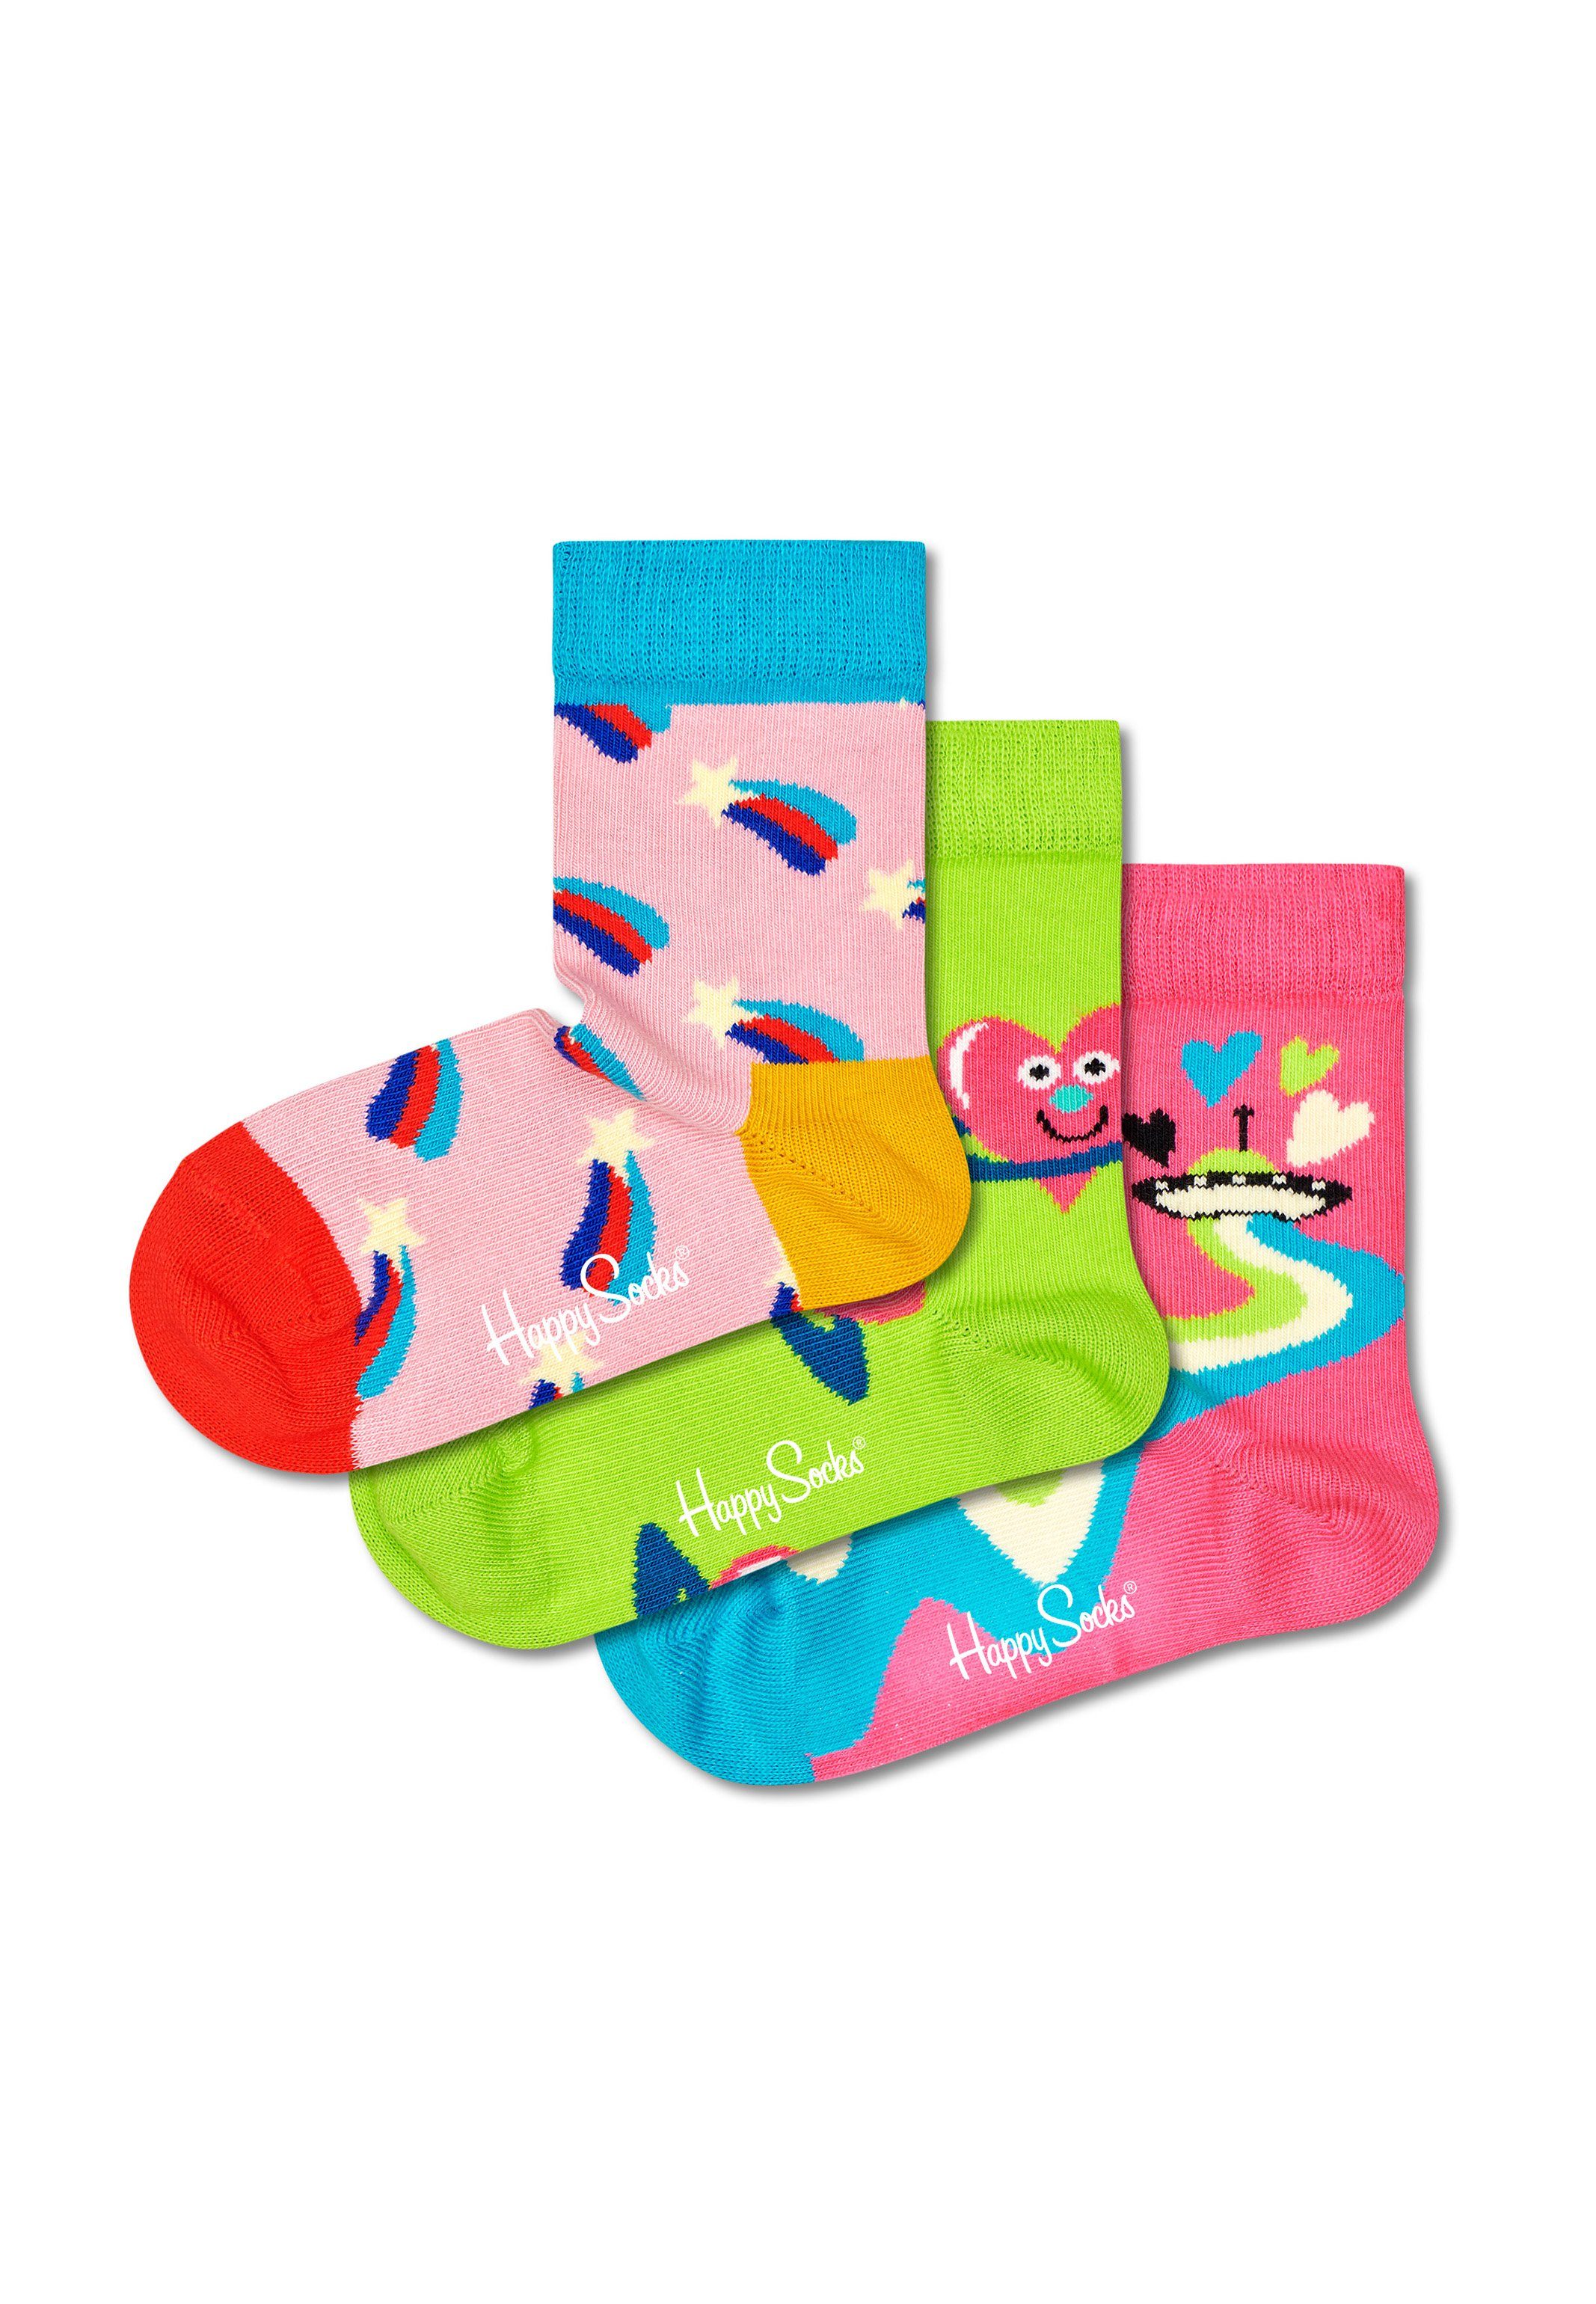 Happy Socks Langsocken Kids Hearts and Stars Geschenk Box (Spar-Set, 3-Paar) 3 Paar Socken - Baumwolle - 3 Paar bunte Socken in einer Geschenkbox unbekannt